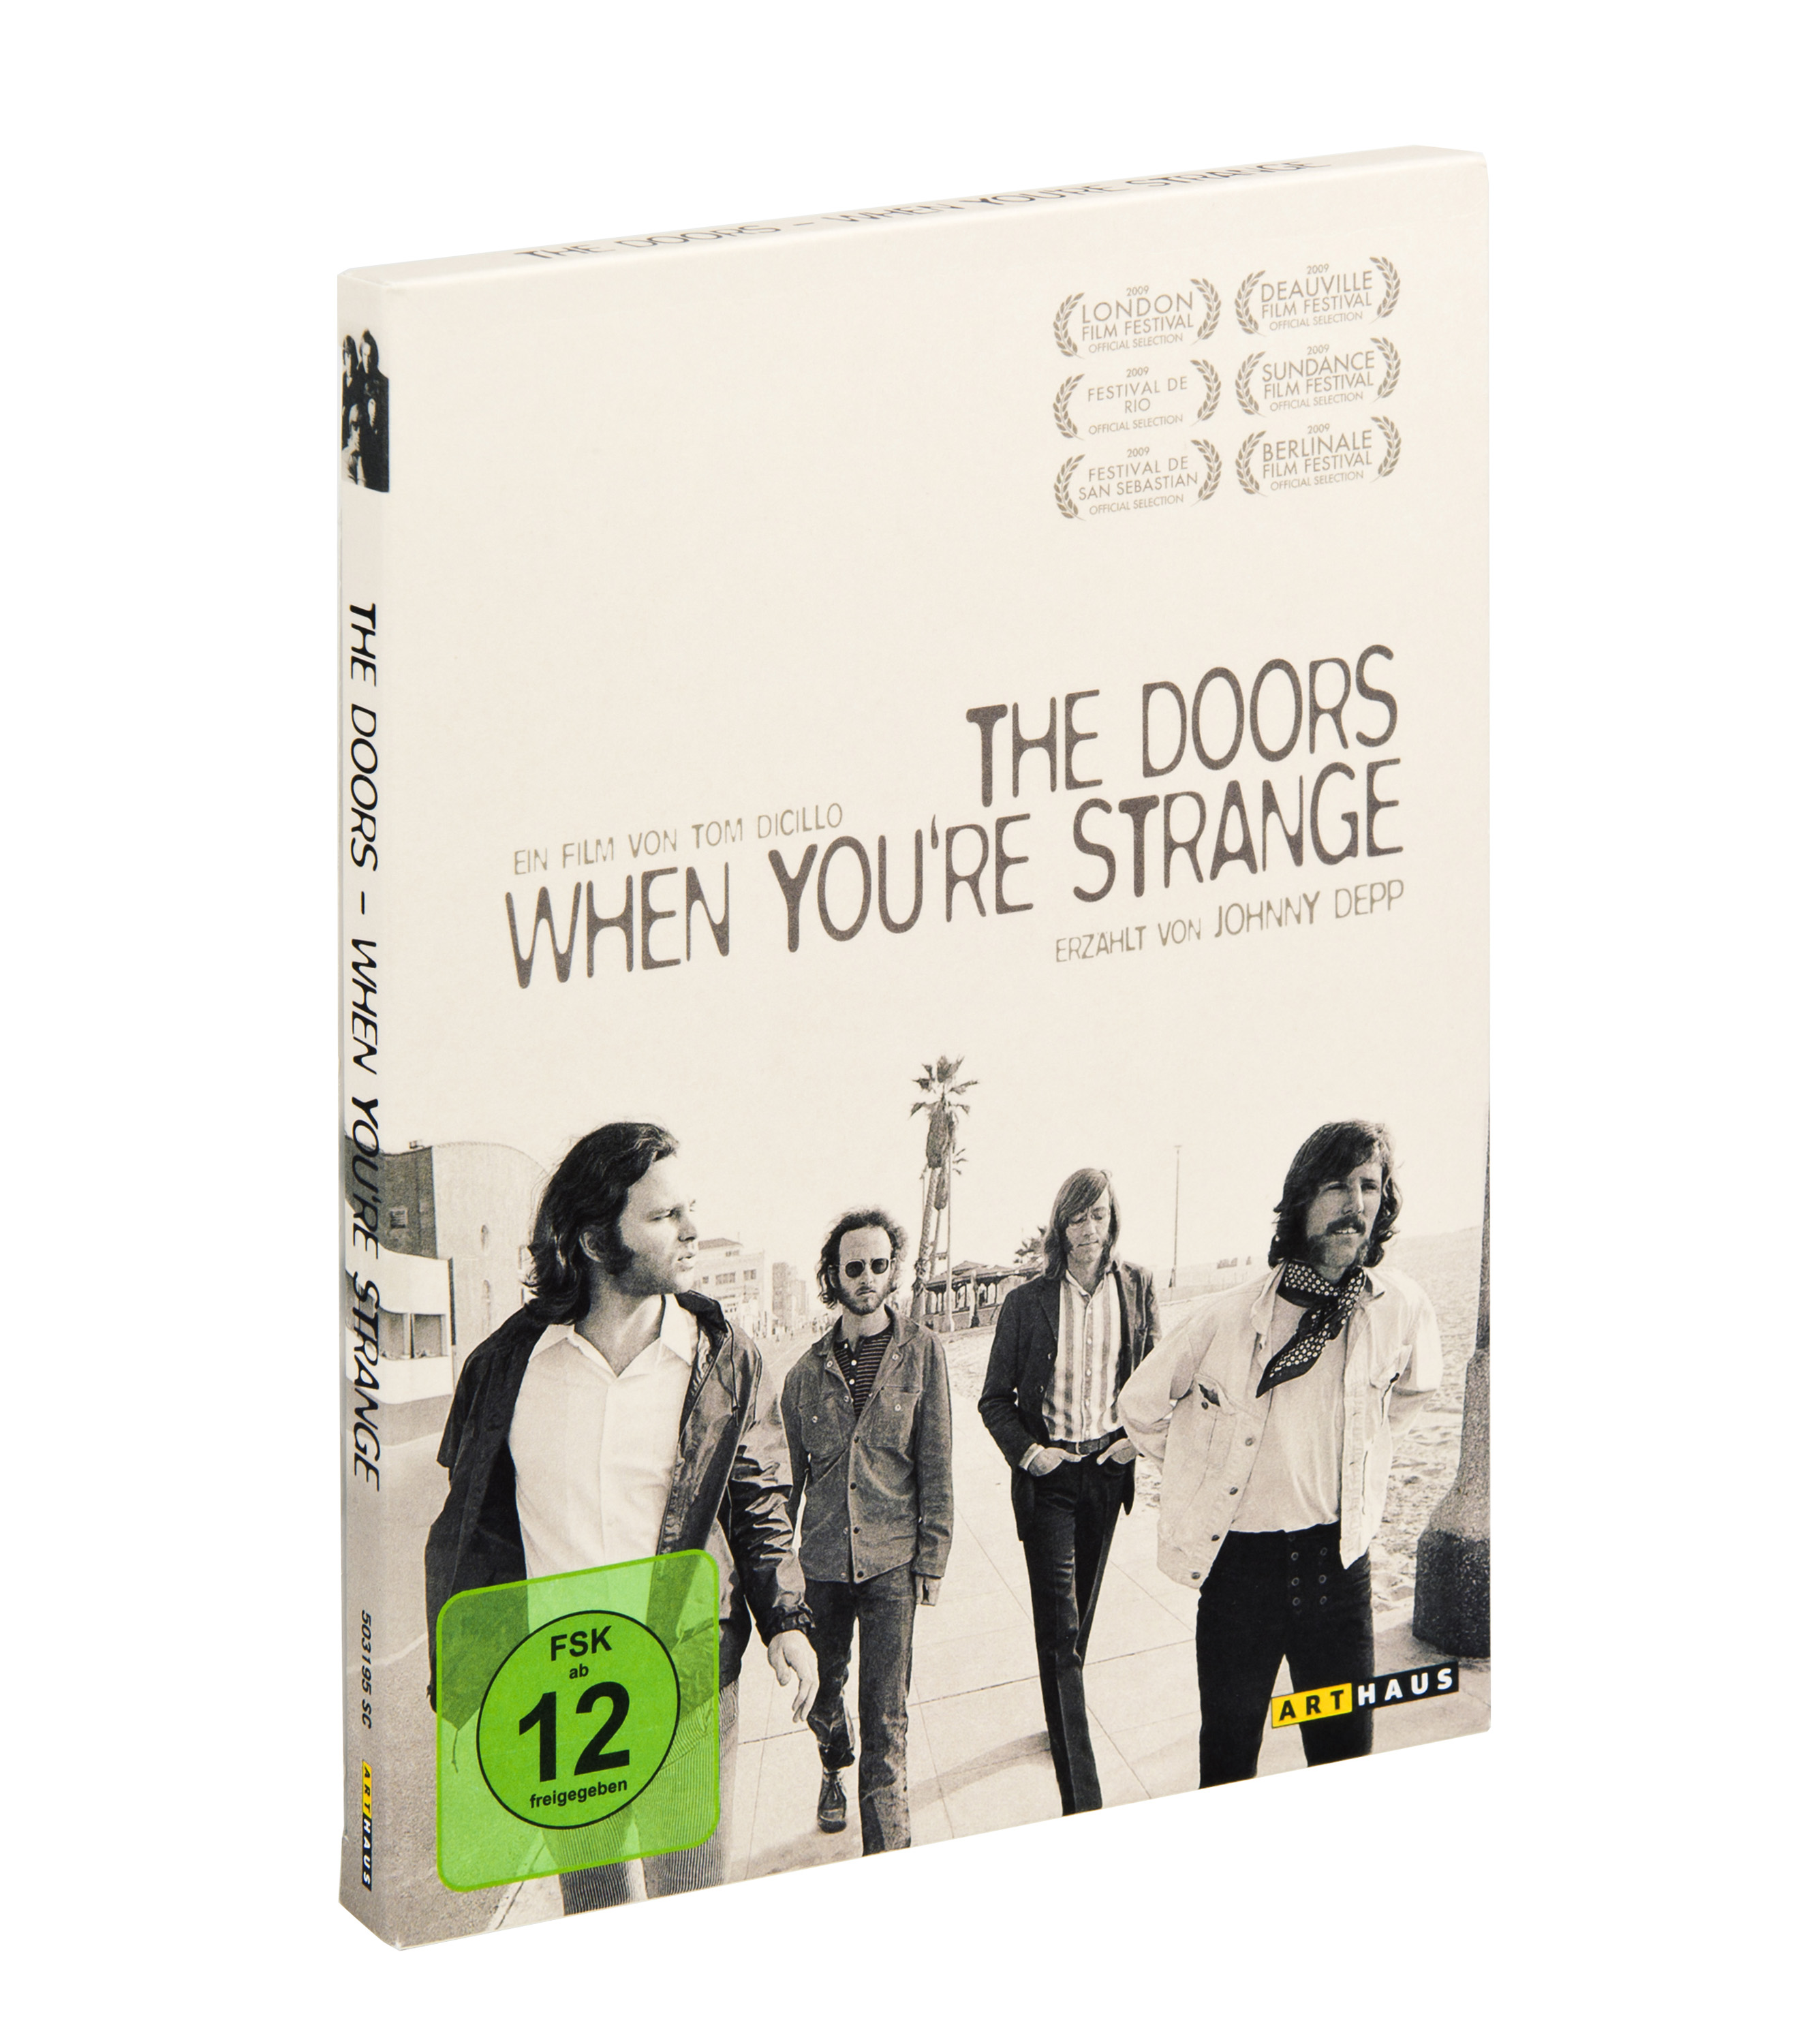 The DVD When - Strange You\'re Doors